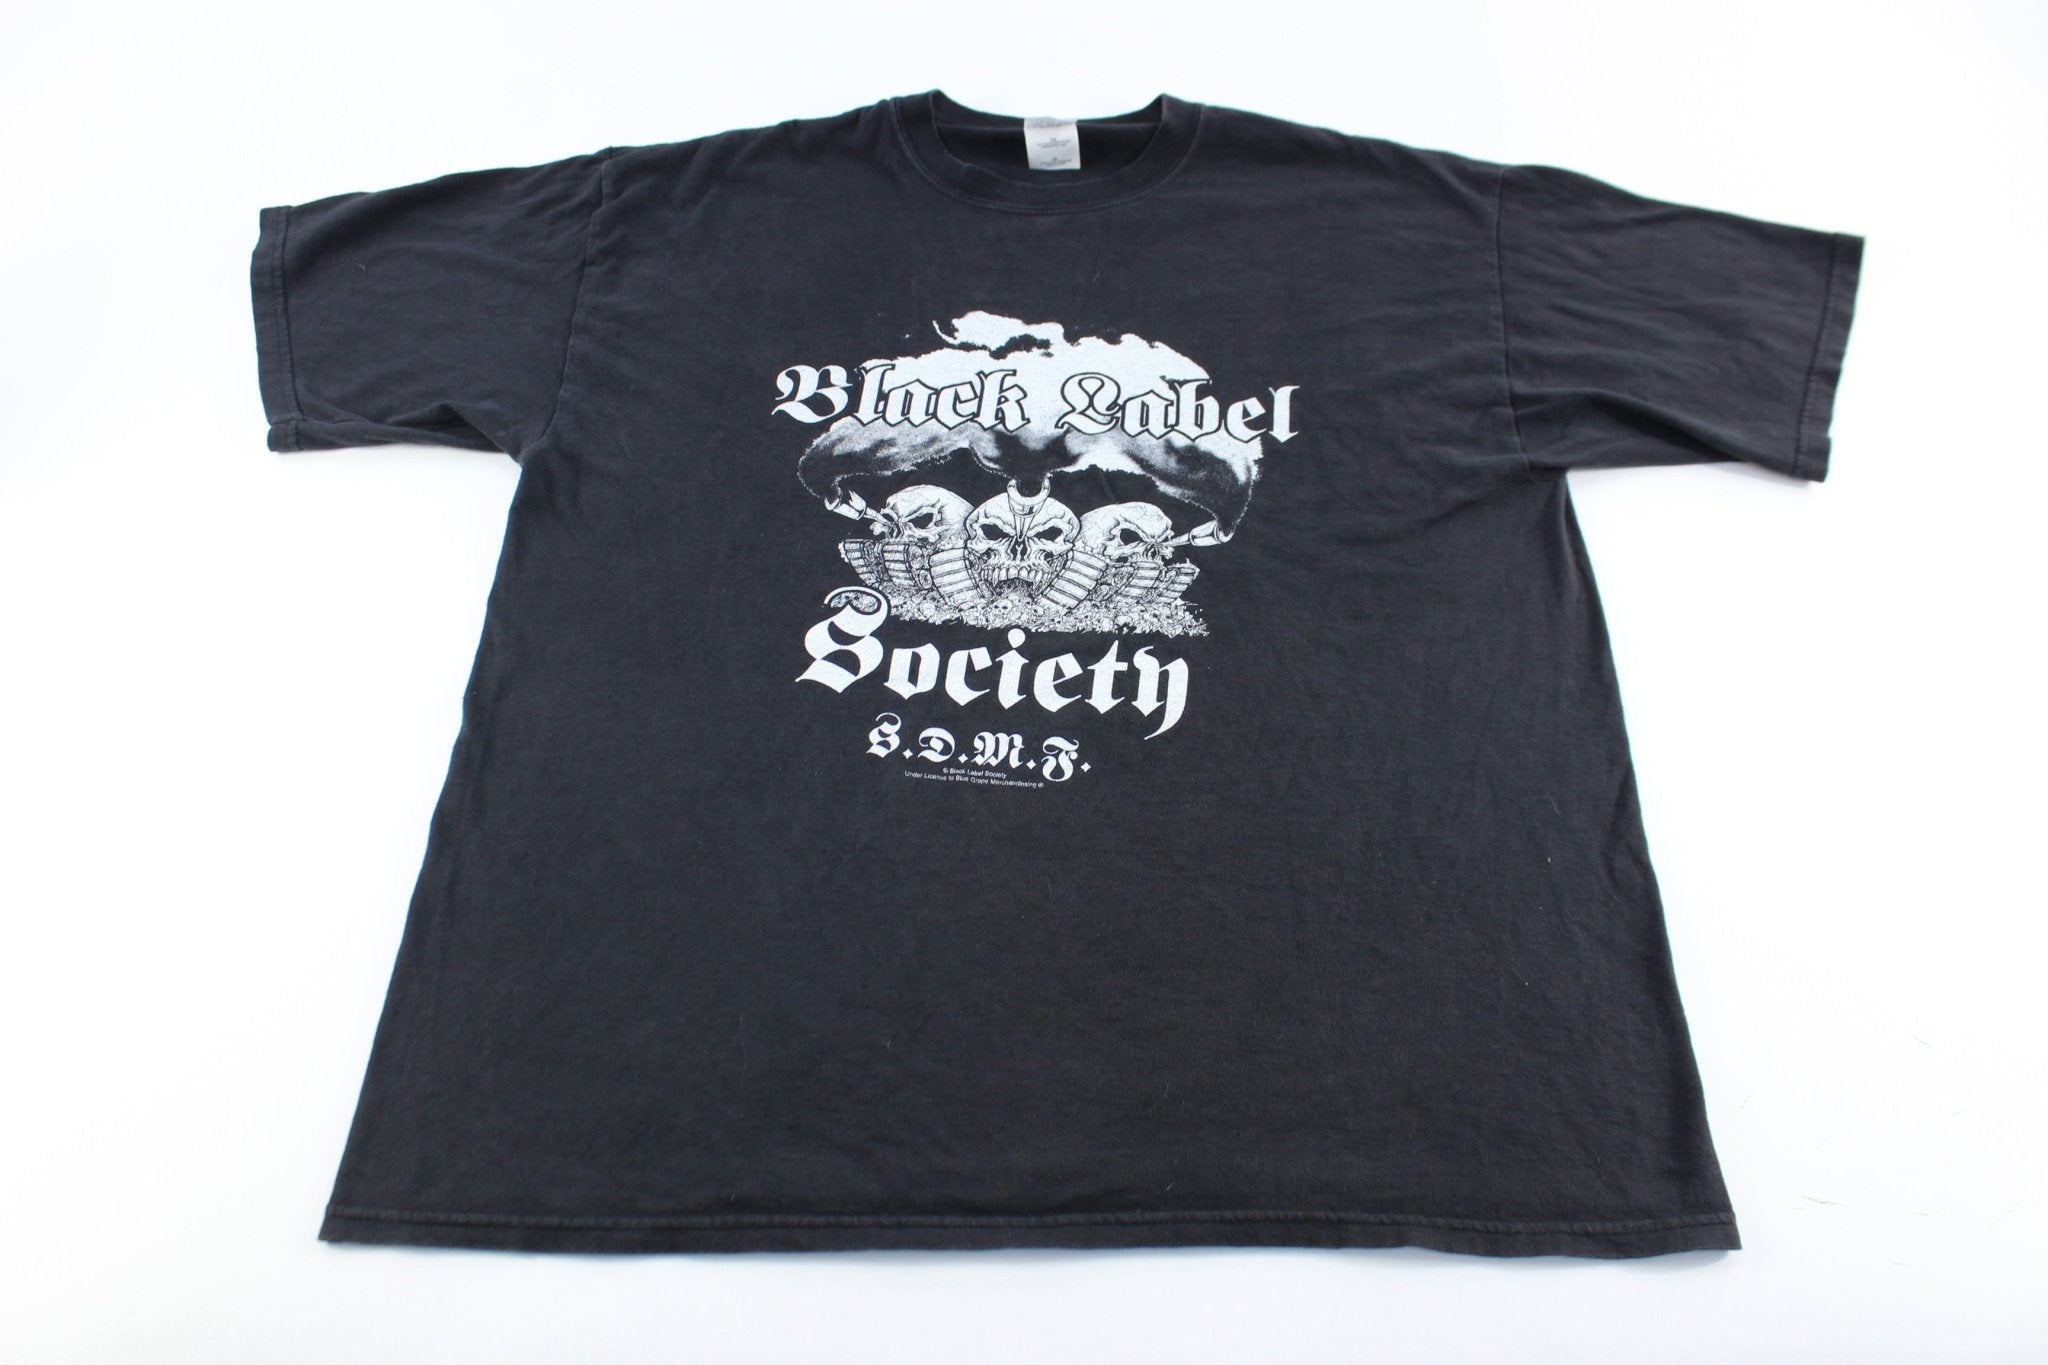 2002 Black Label Society Lords of Destruction T-Shirt